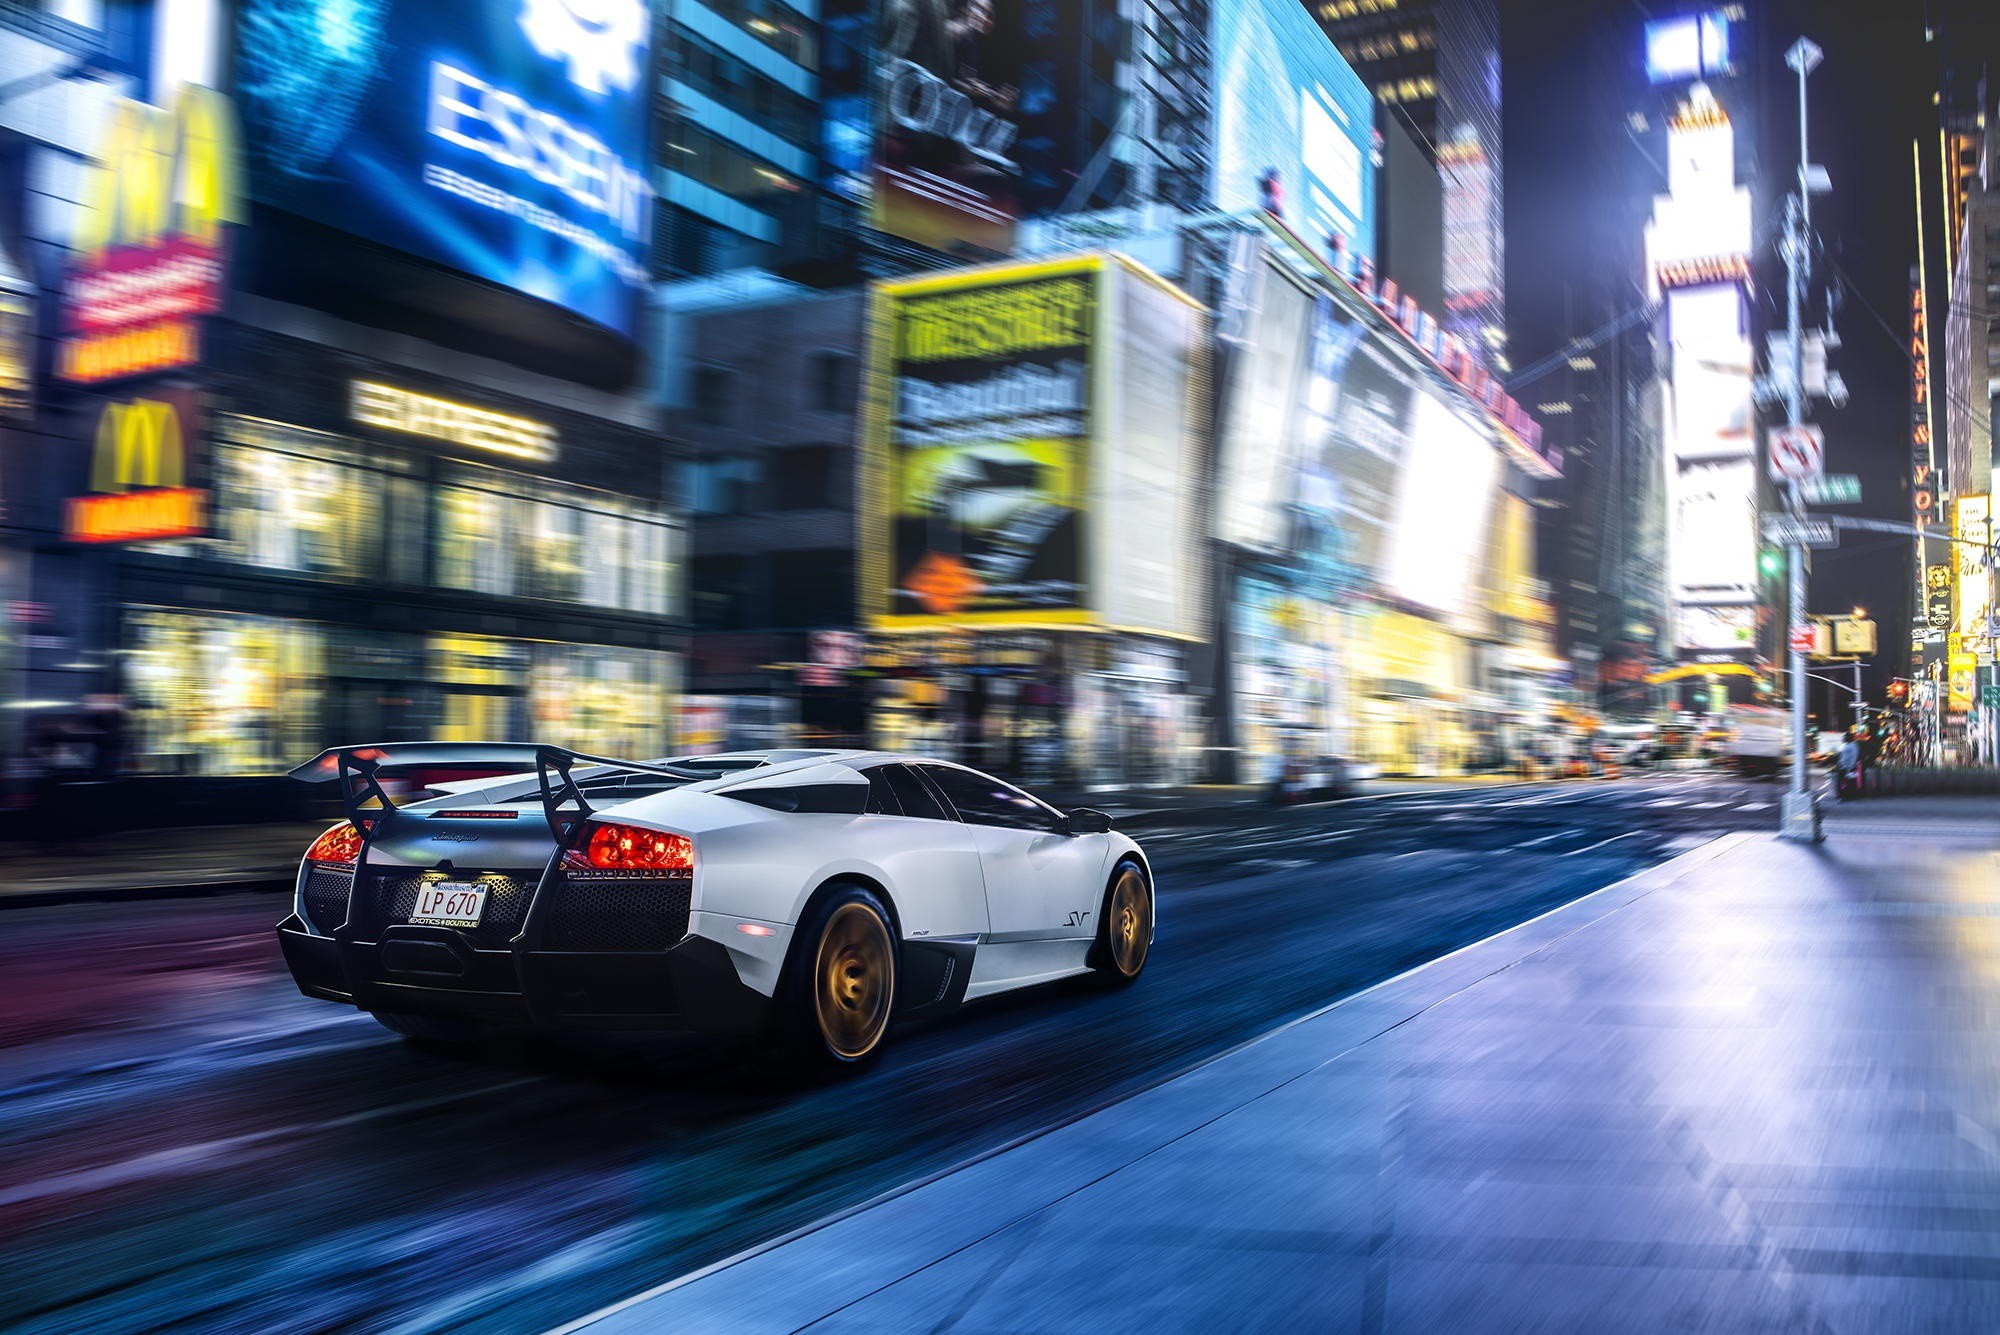 General 2000x1335 Times Square New York City motion blur USA night vehicle white cars Lamborghini Lamborghini Murcielago supercars city urban street long exposure car